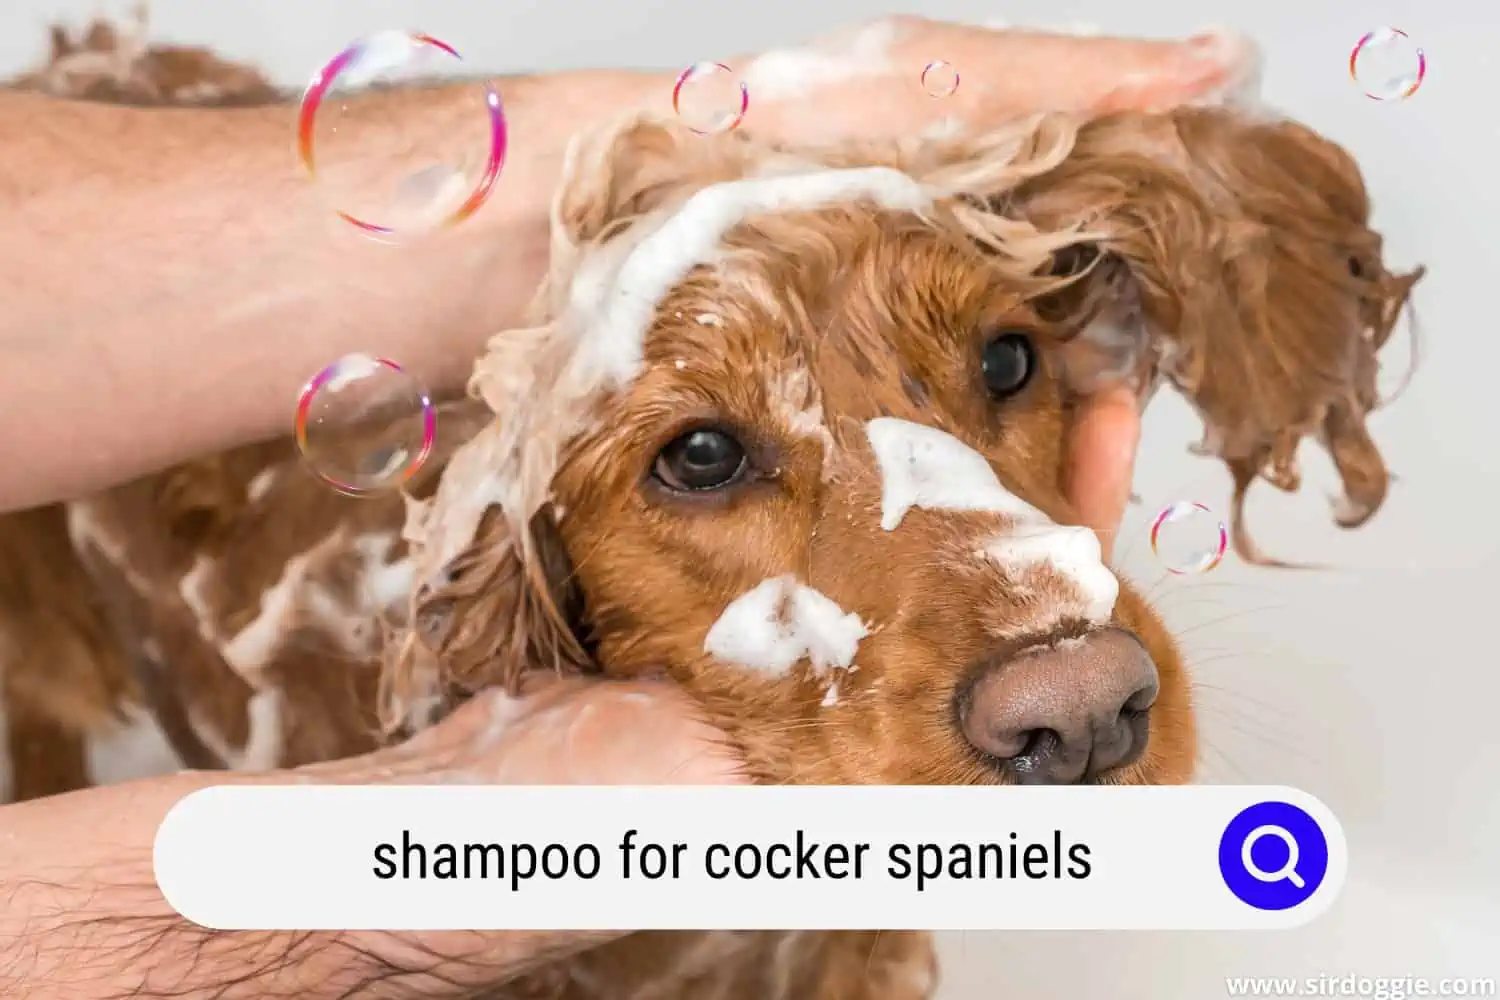 A pet owner bathing her Cocker Spaniel dog